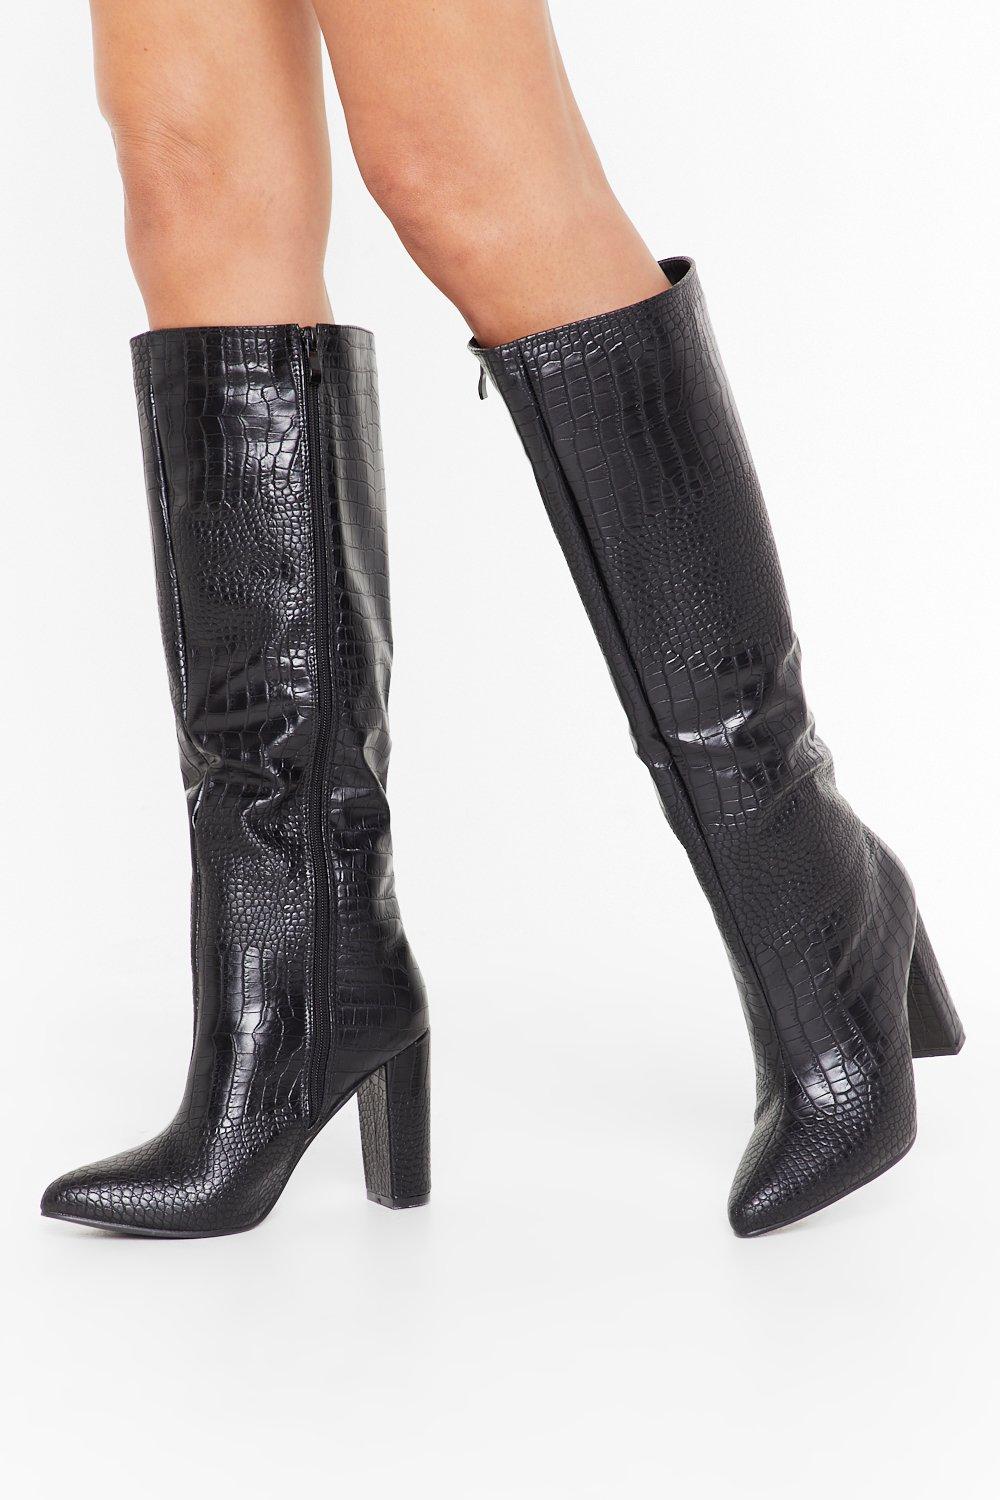 black croc knee high boots